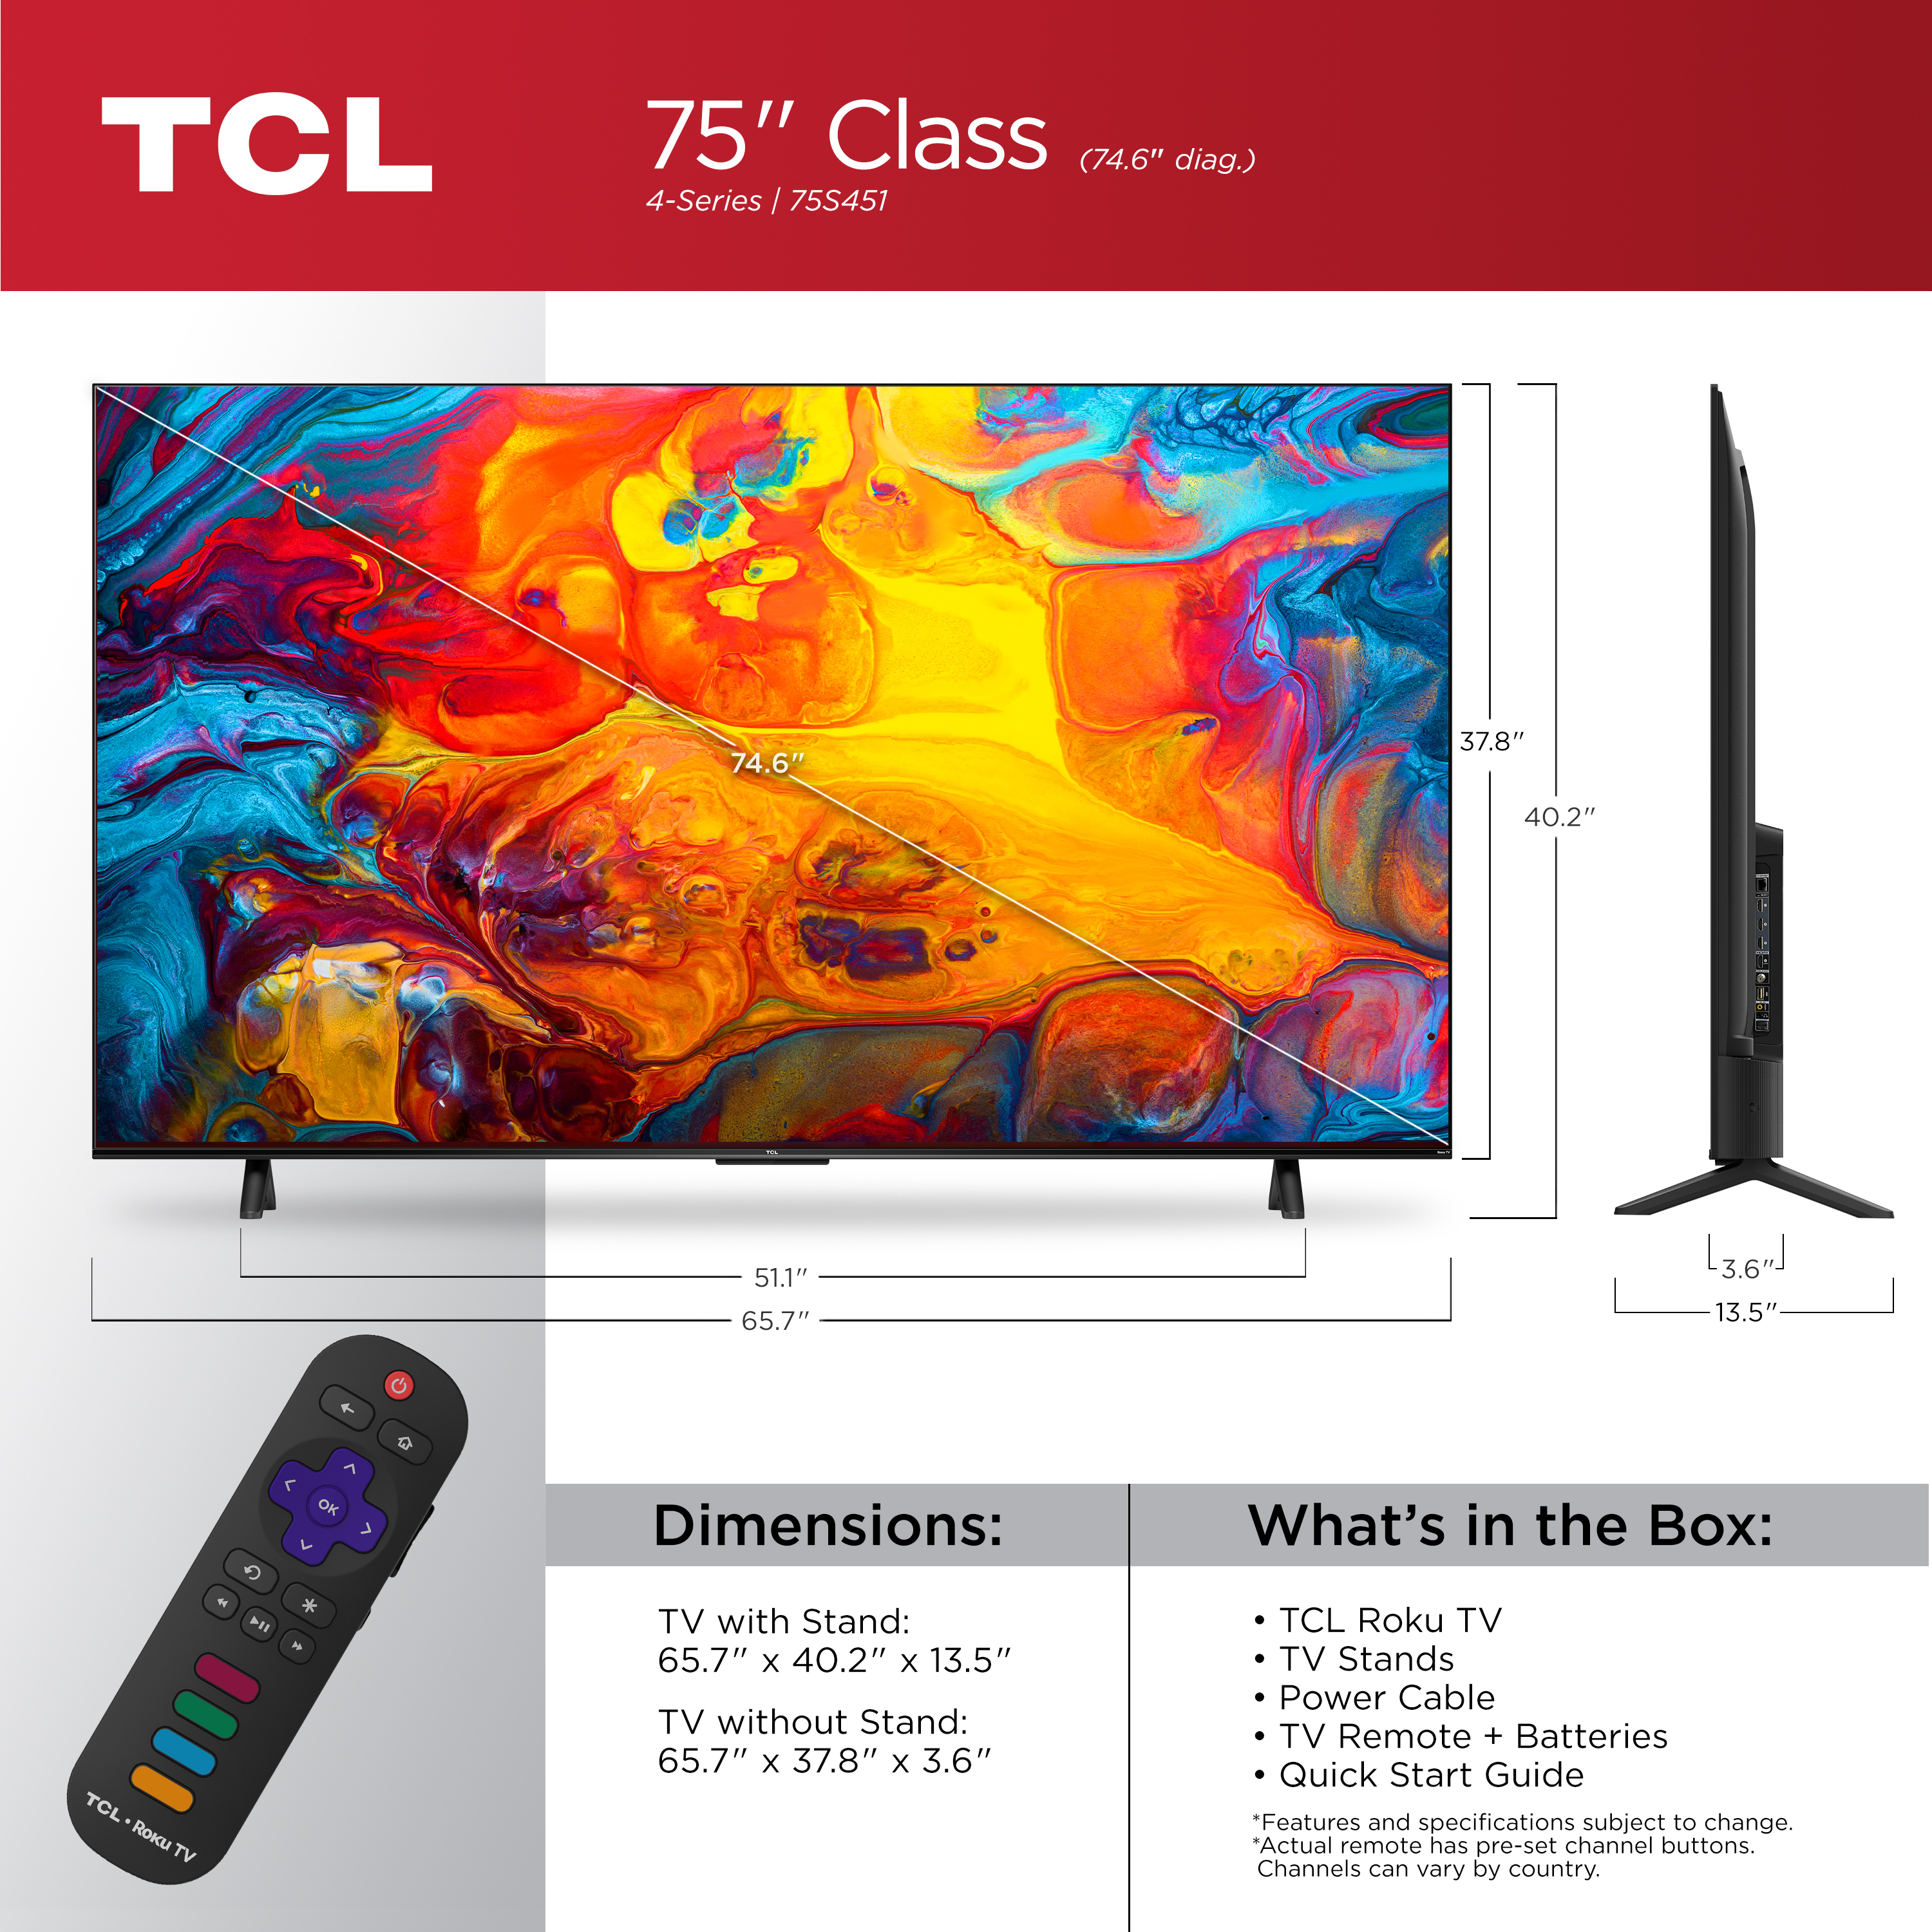 TCL 75" Class 4-Series 4K UHD HDR Smart Roku TV - 75S451 - image 5 of 21